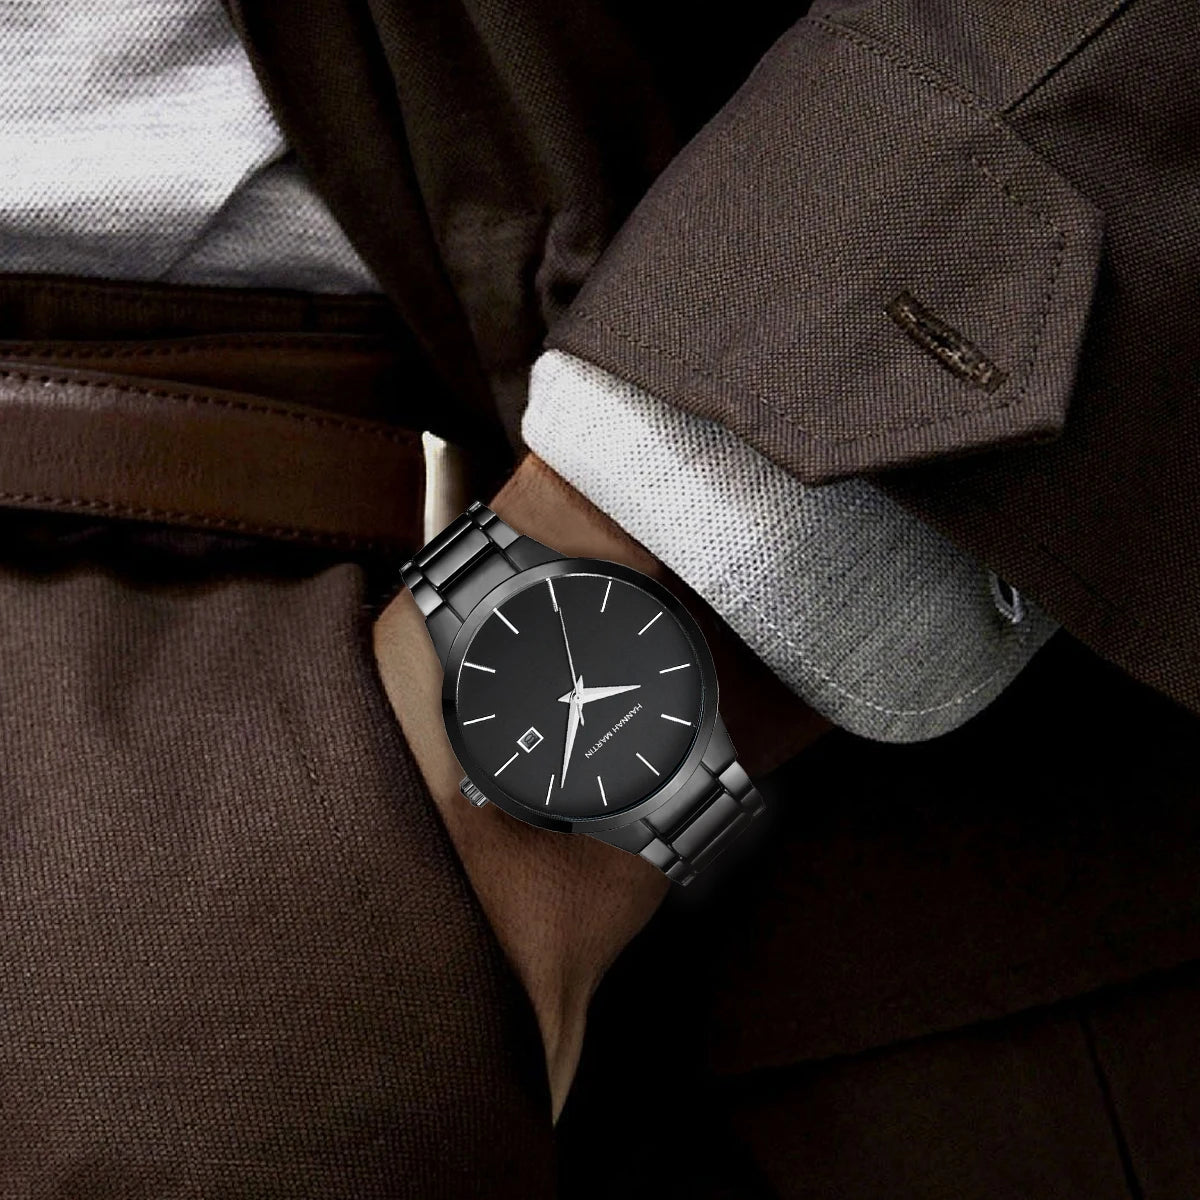 Luxury Calendar Quartz Sports Watch Stainless Steel, Full Black, Waterproof-Top Brand Elegance for Men